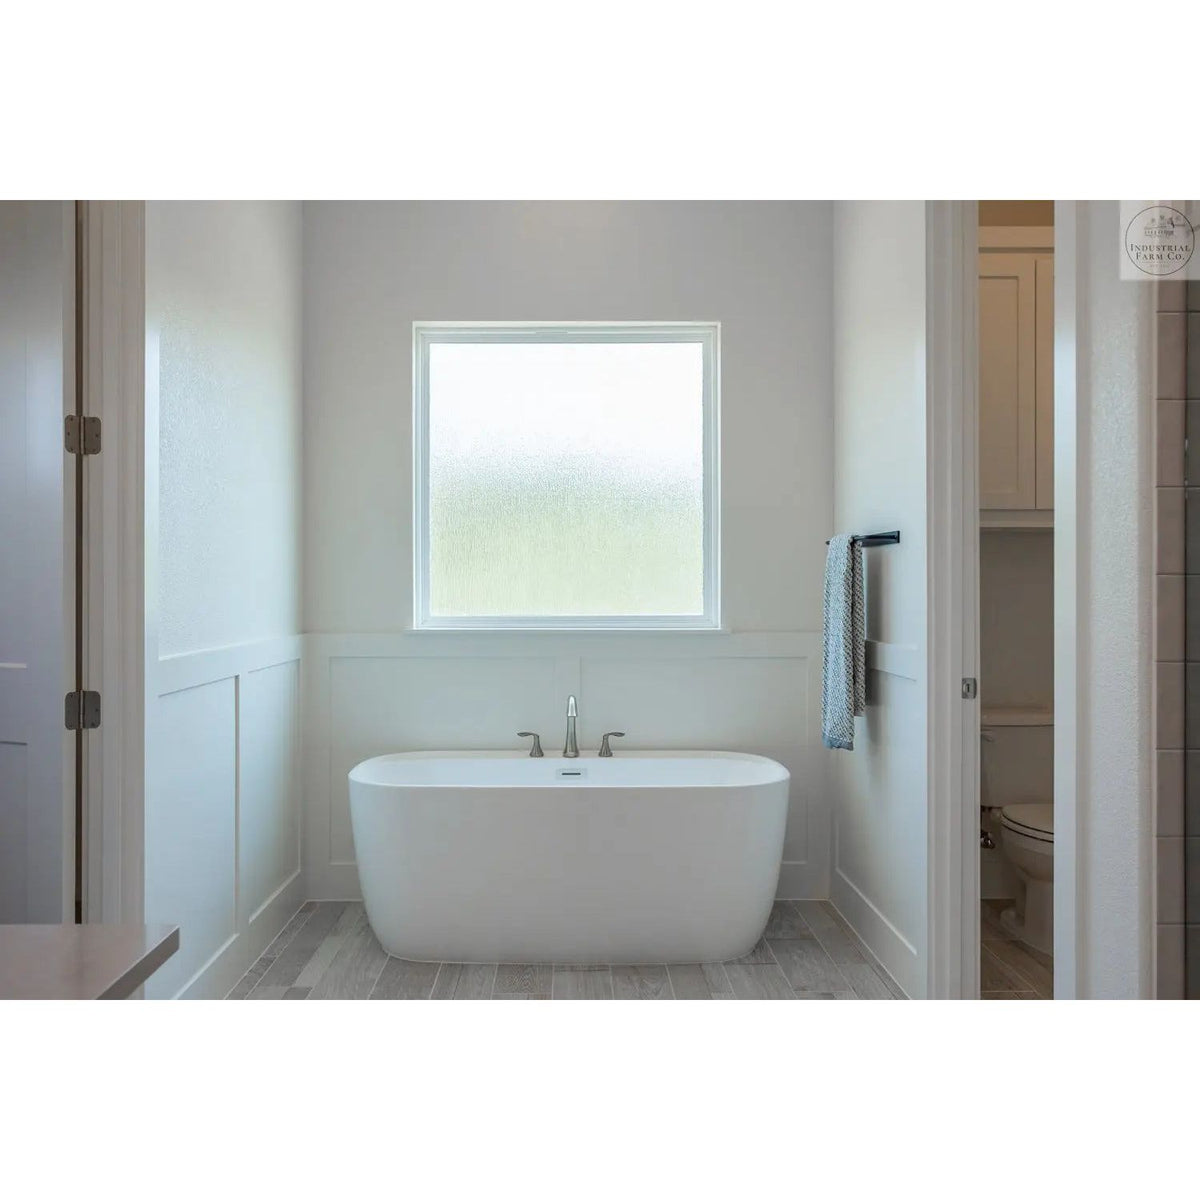 The Oswego Modern Bathroom Towel Bar Towel Bar 12&quot; Wall Mount Length Finish Clear Coat | Industrial Farm Co